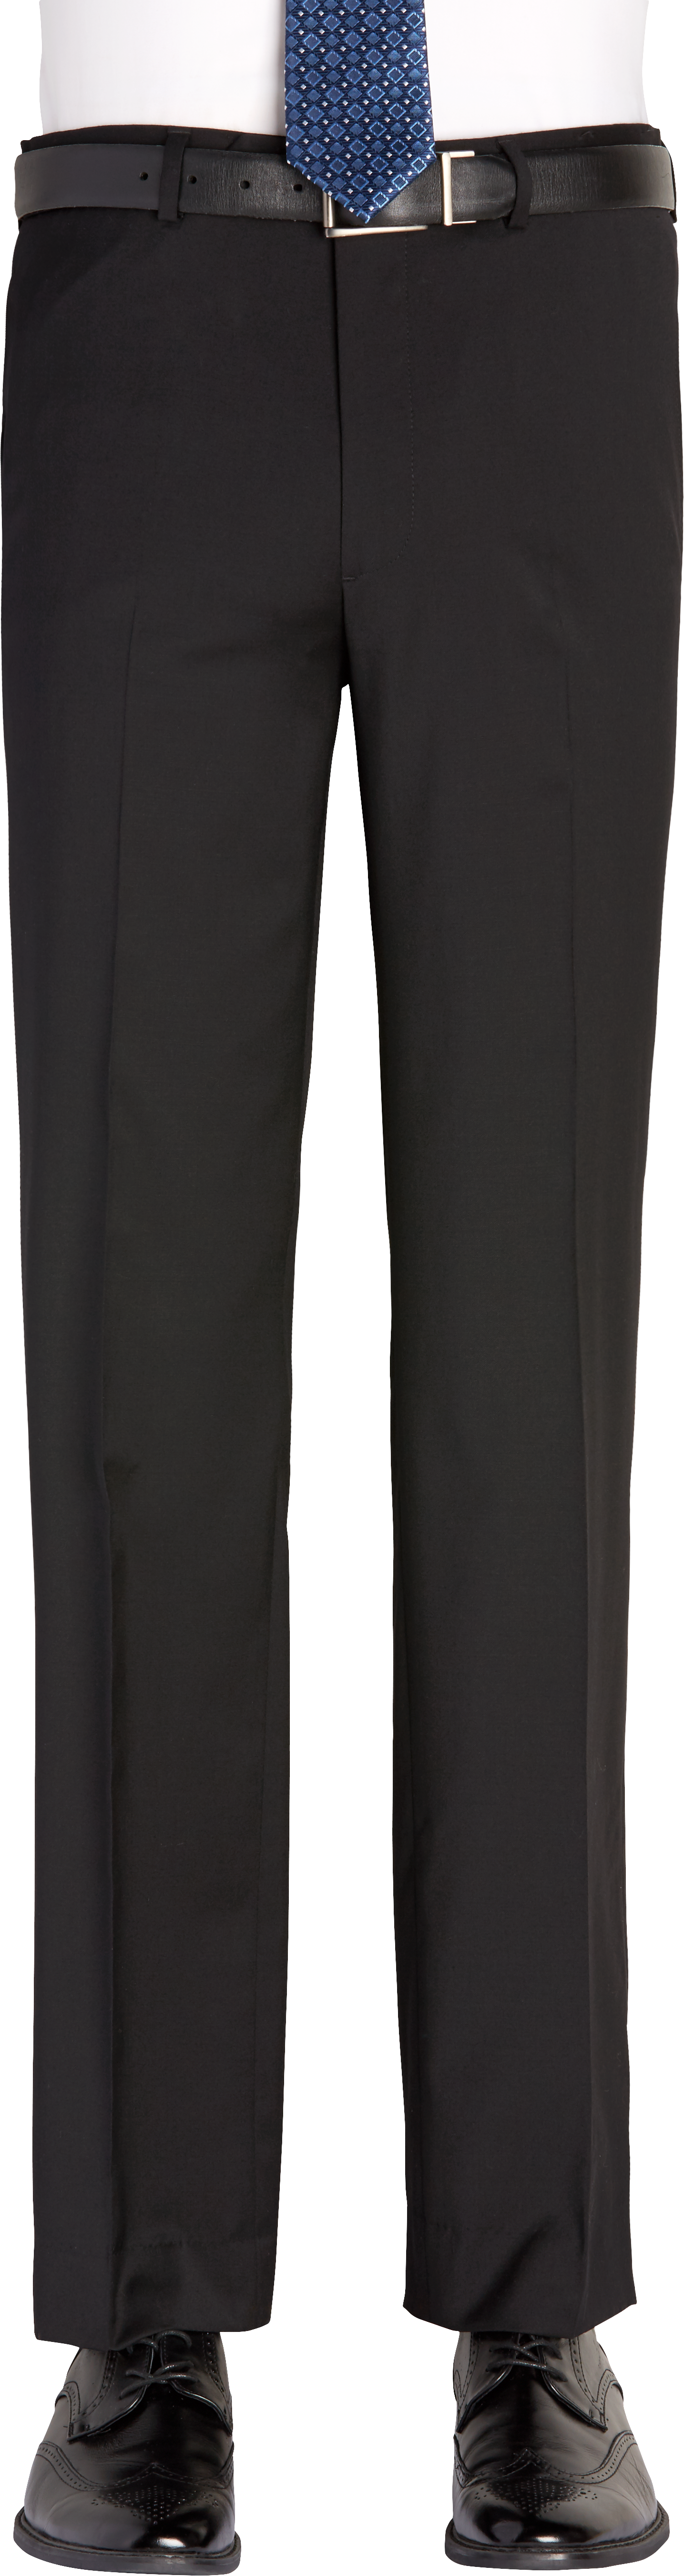 Mens Black Suits, Suits - Awearness Kenneth Cole Modern Fit Suit Separates Pants, Black - Men's Wearhouse